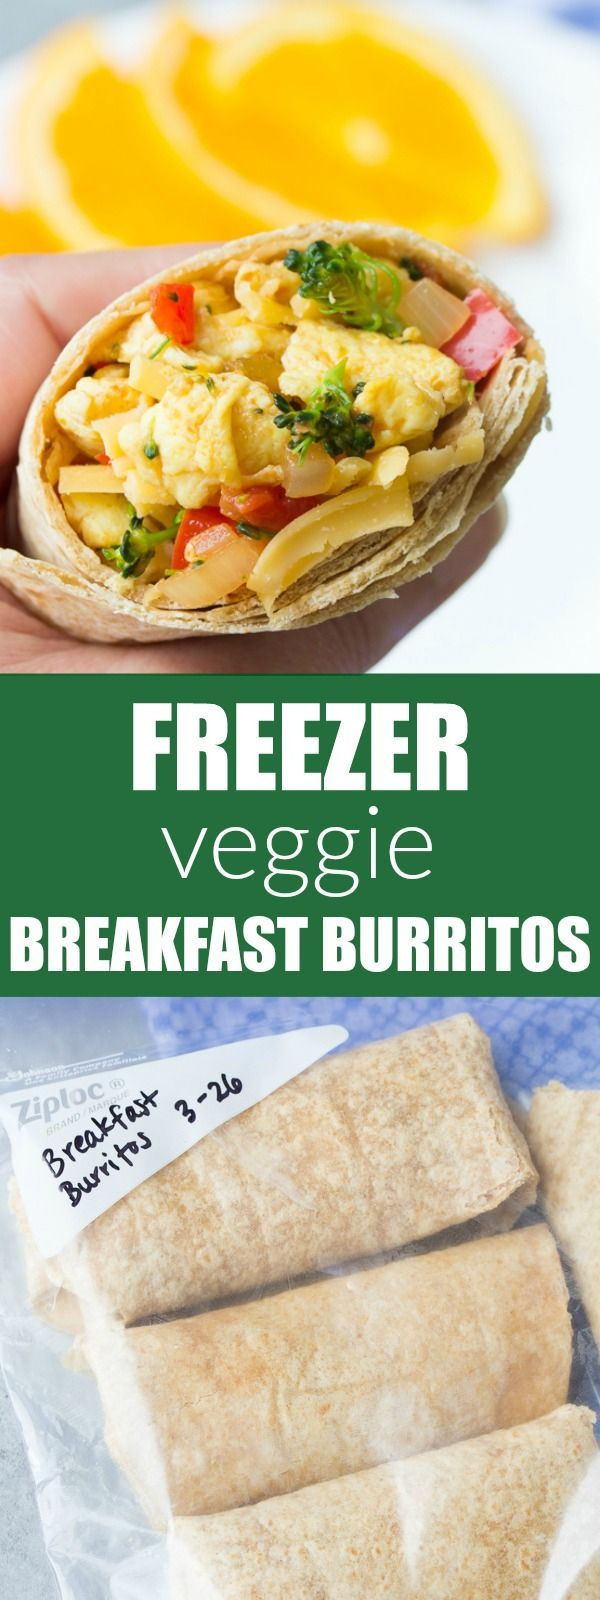 Healthy Premade Breakfast
 Best 25 Breakfast burritos ideas on Pinterest